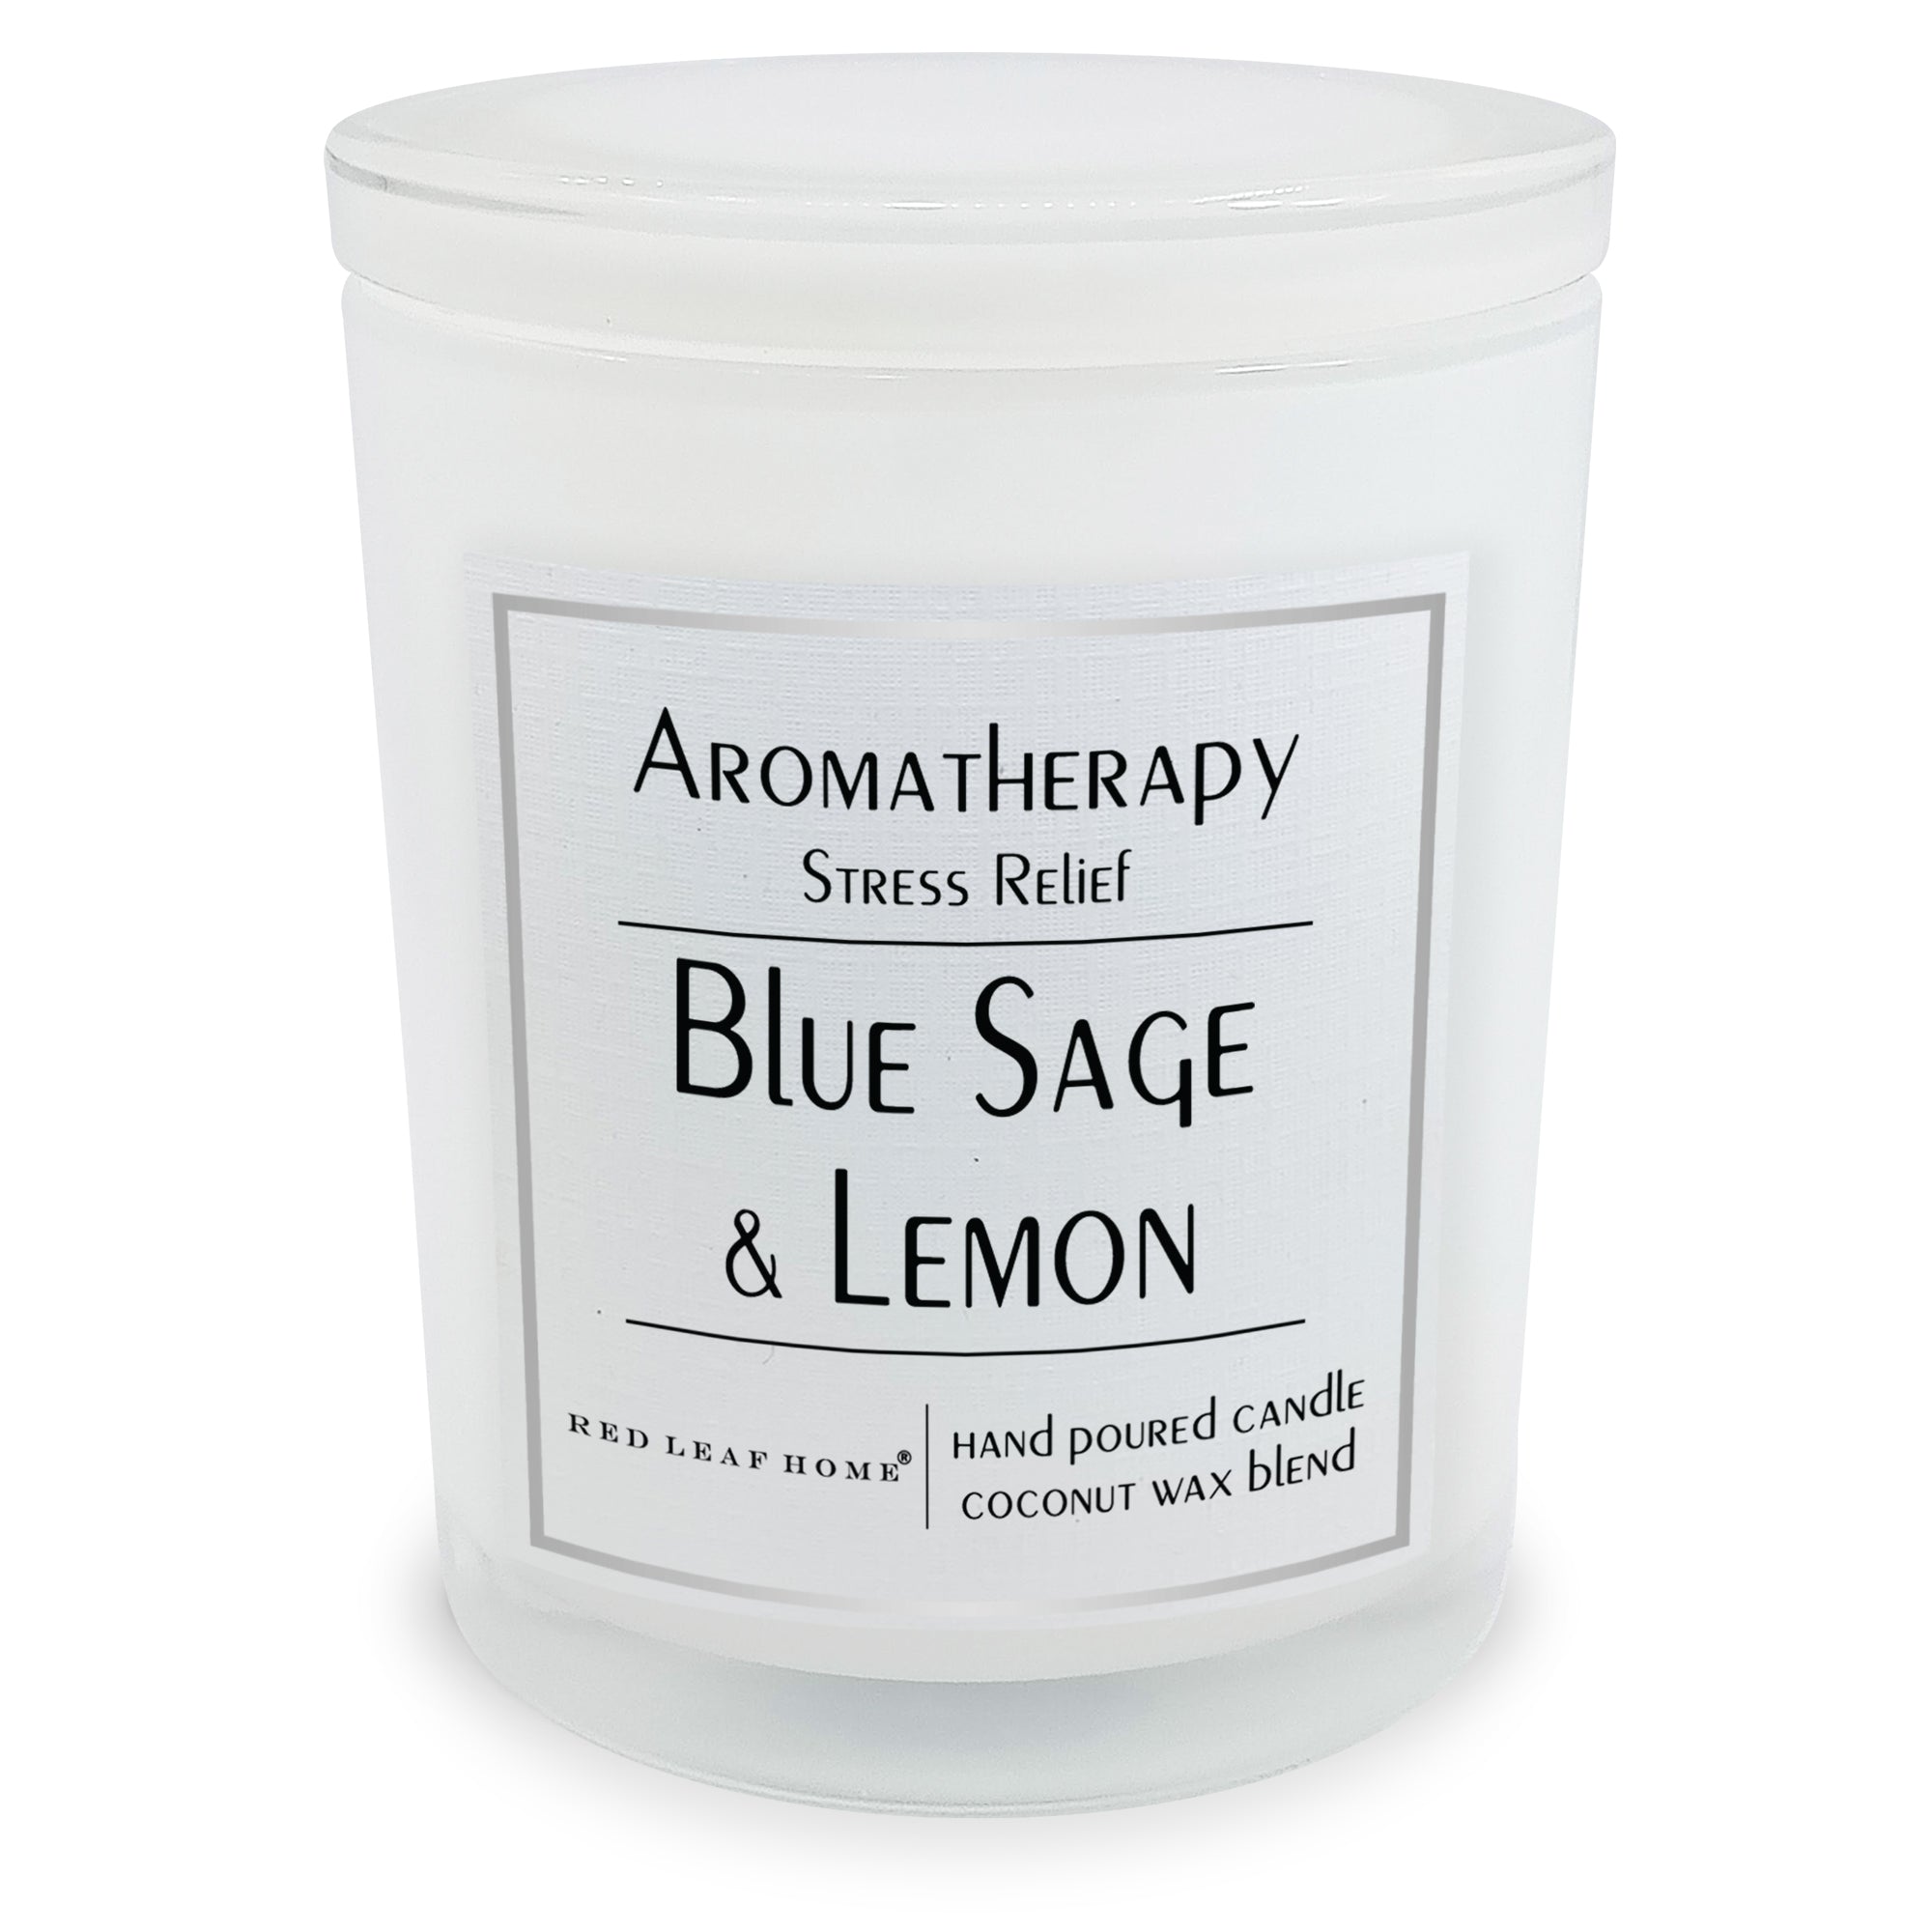 Blue Sage and Lemon Aromatherapy